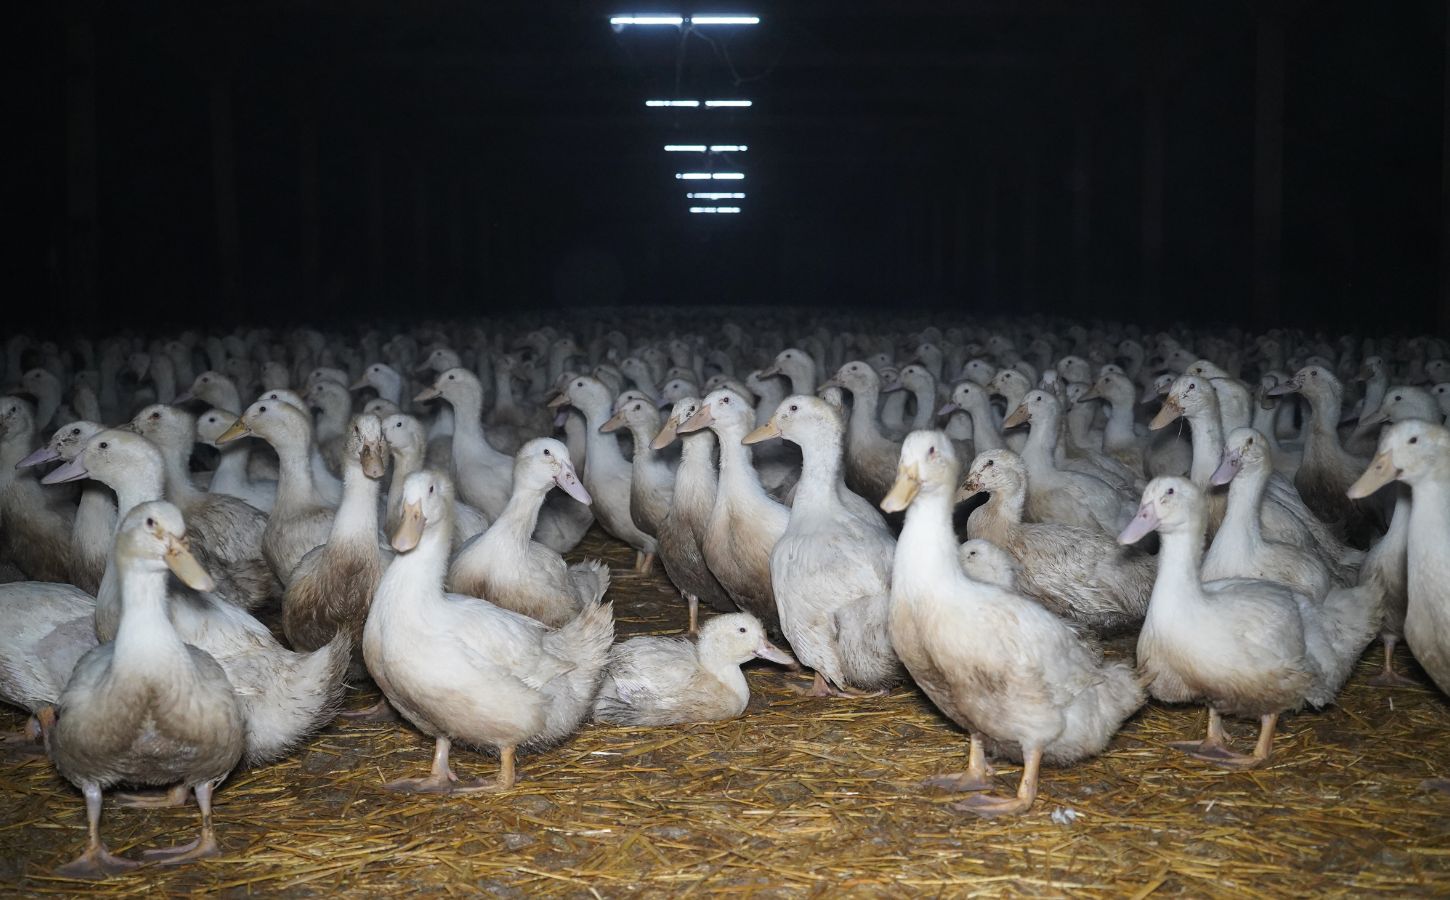 Ducks on an intensive duck factory farm in the UK